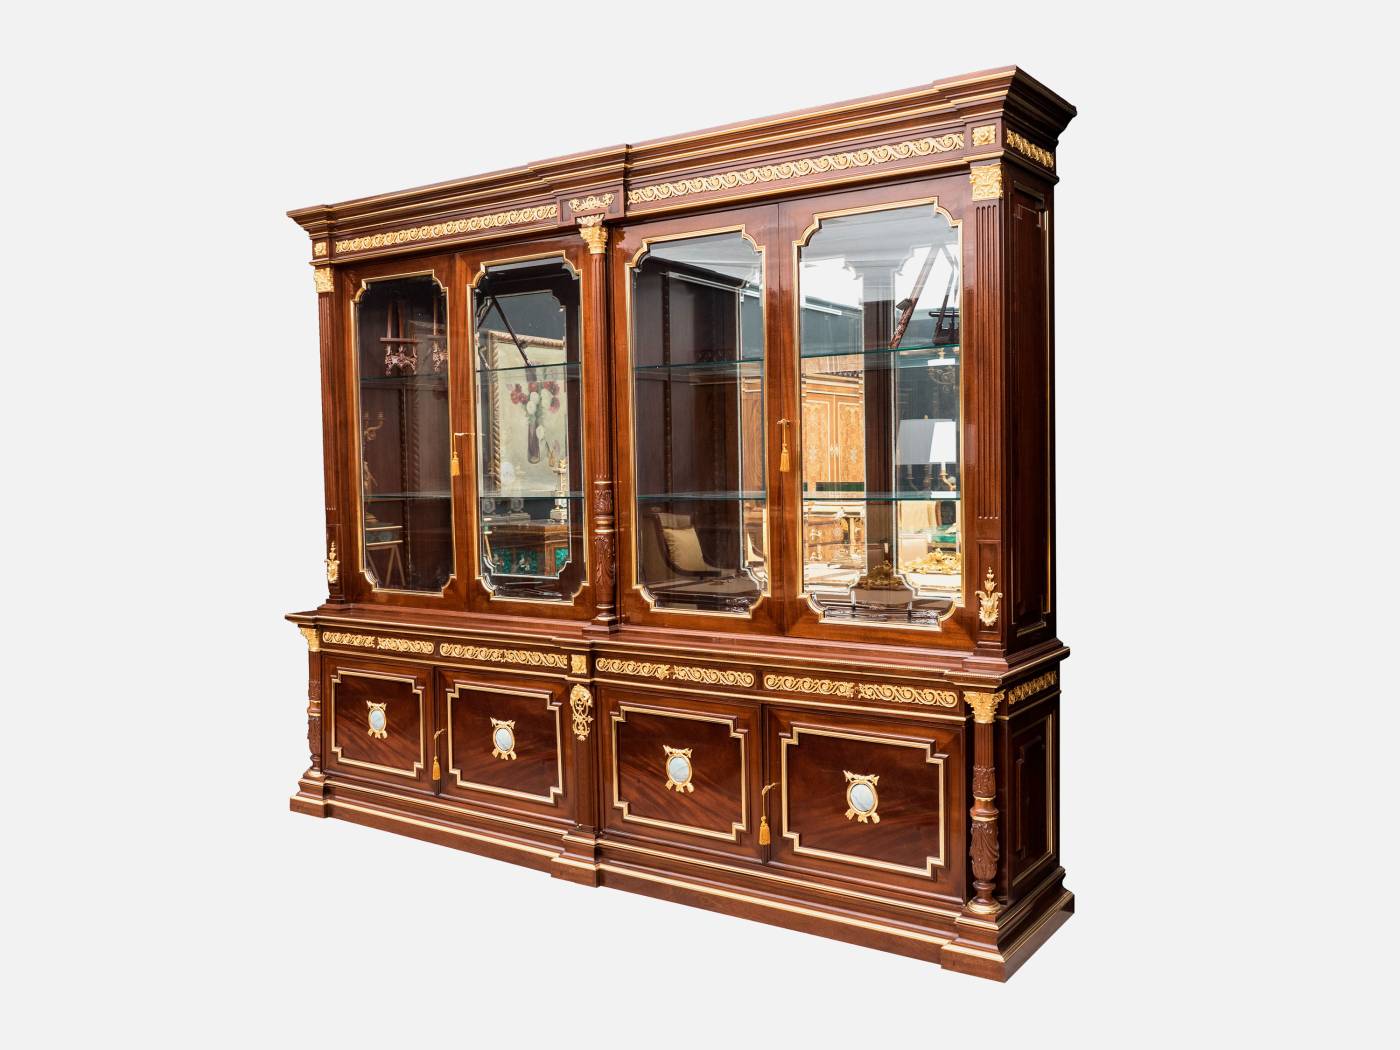 ART. 708-2 – C.G. Capelletti Italian Luxury Classic Showcases and Bookcases. Made in Italy classic interior design